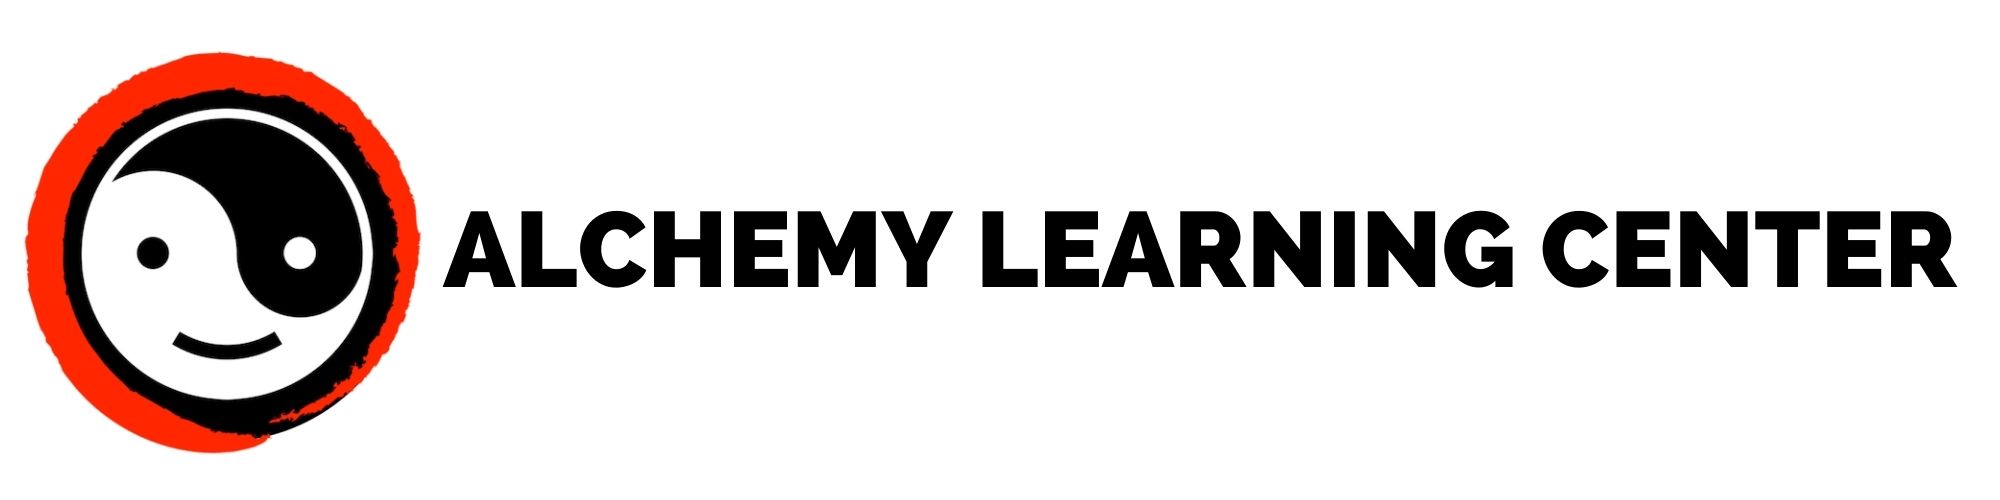 Alchemy Learning Center